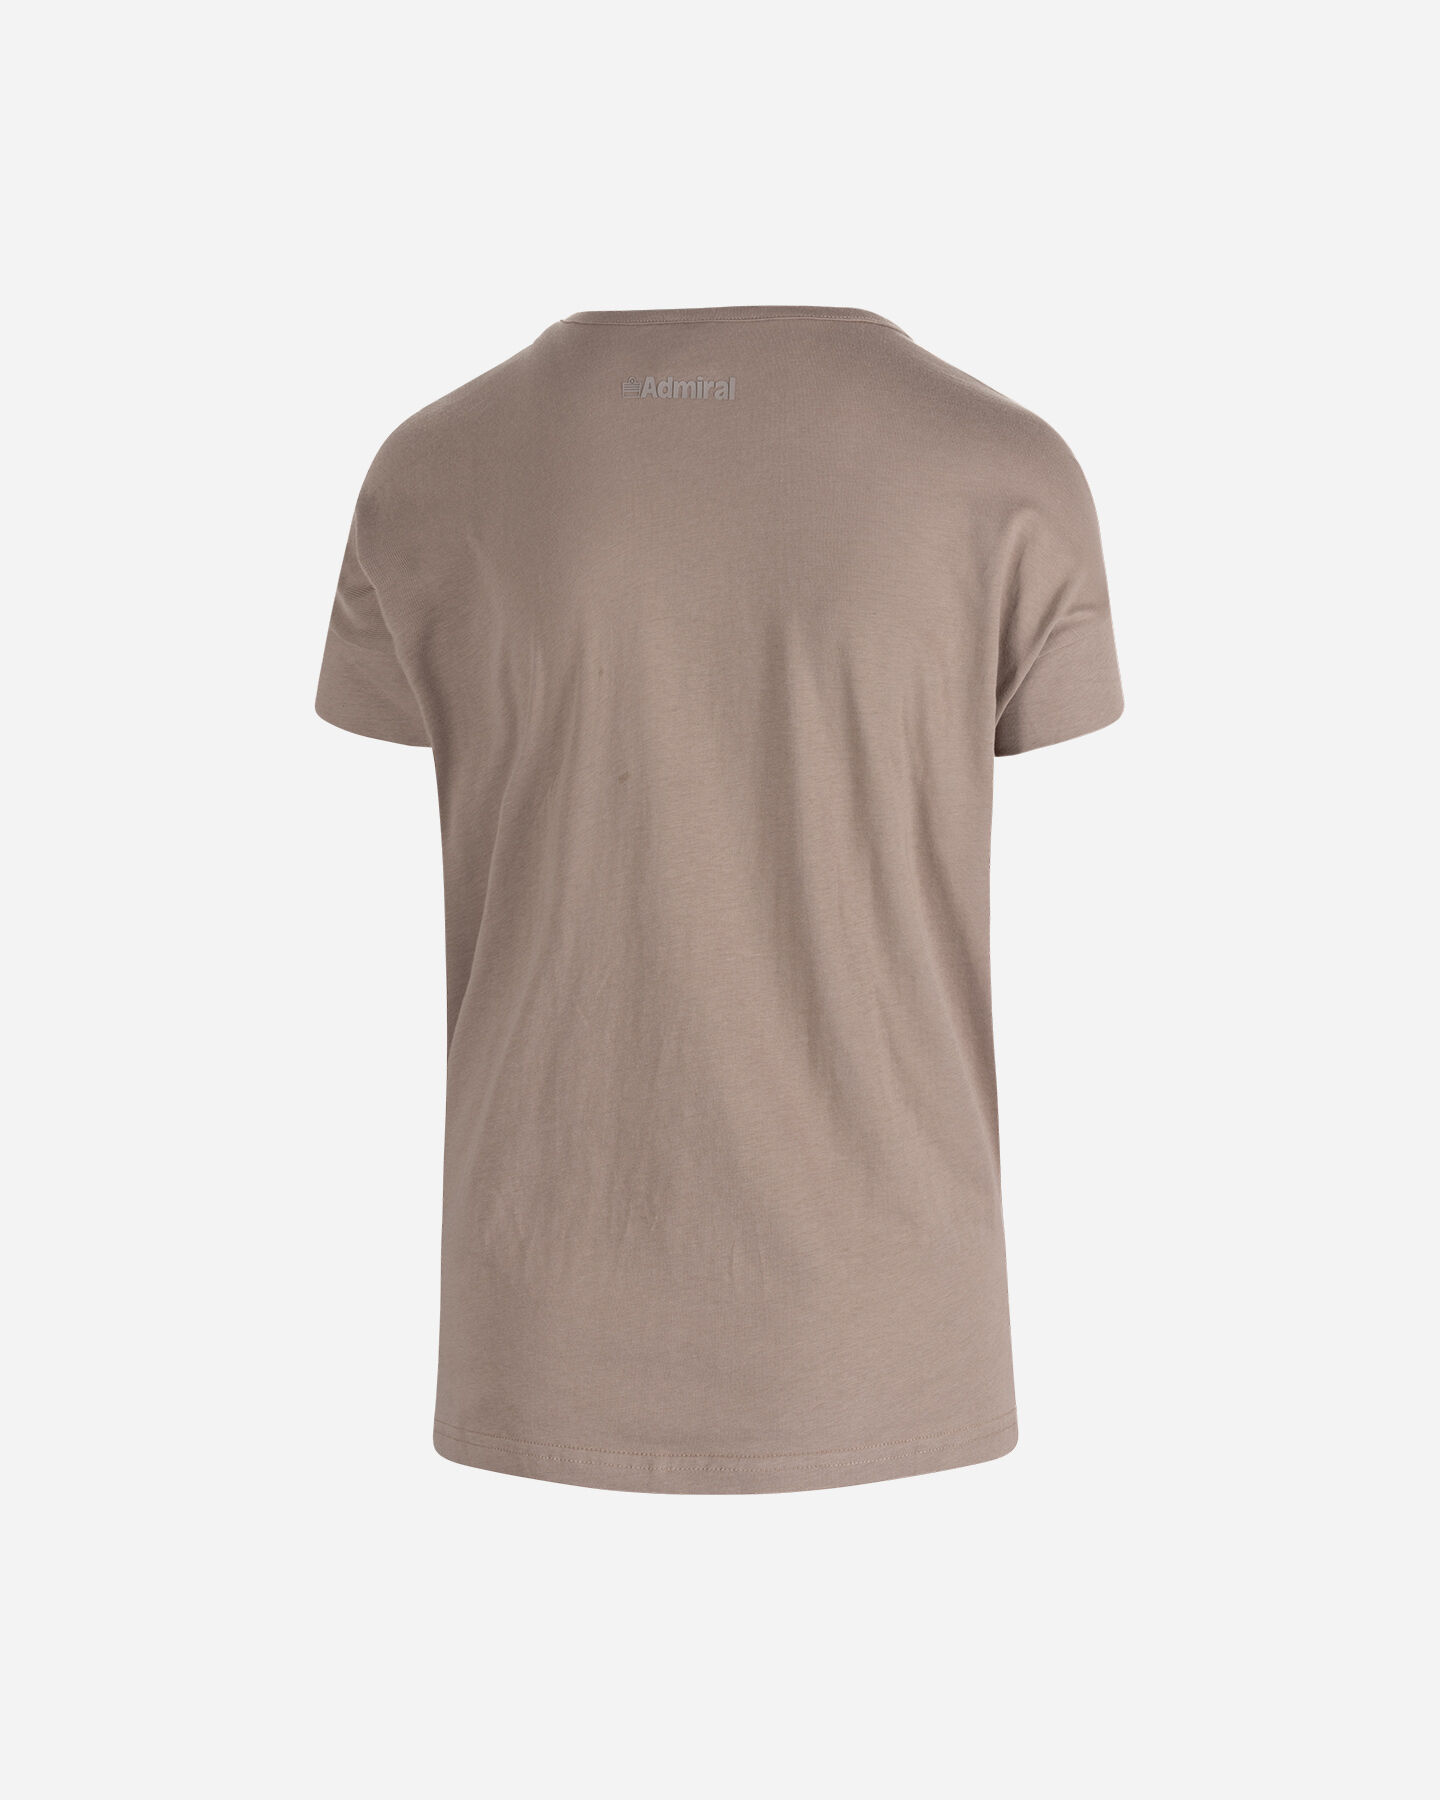  T-Shirt ADMIRAL CLASSIC W S4119411|168|S scatto 1